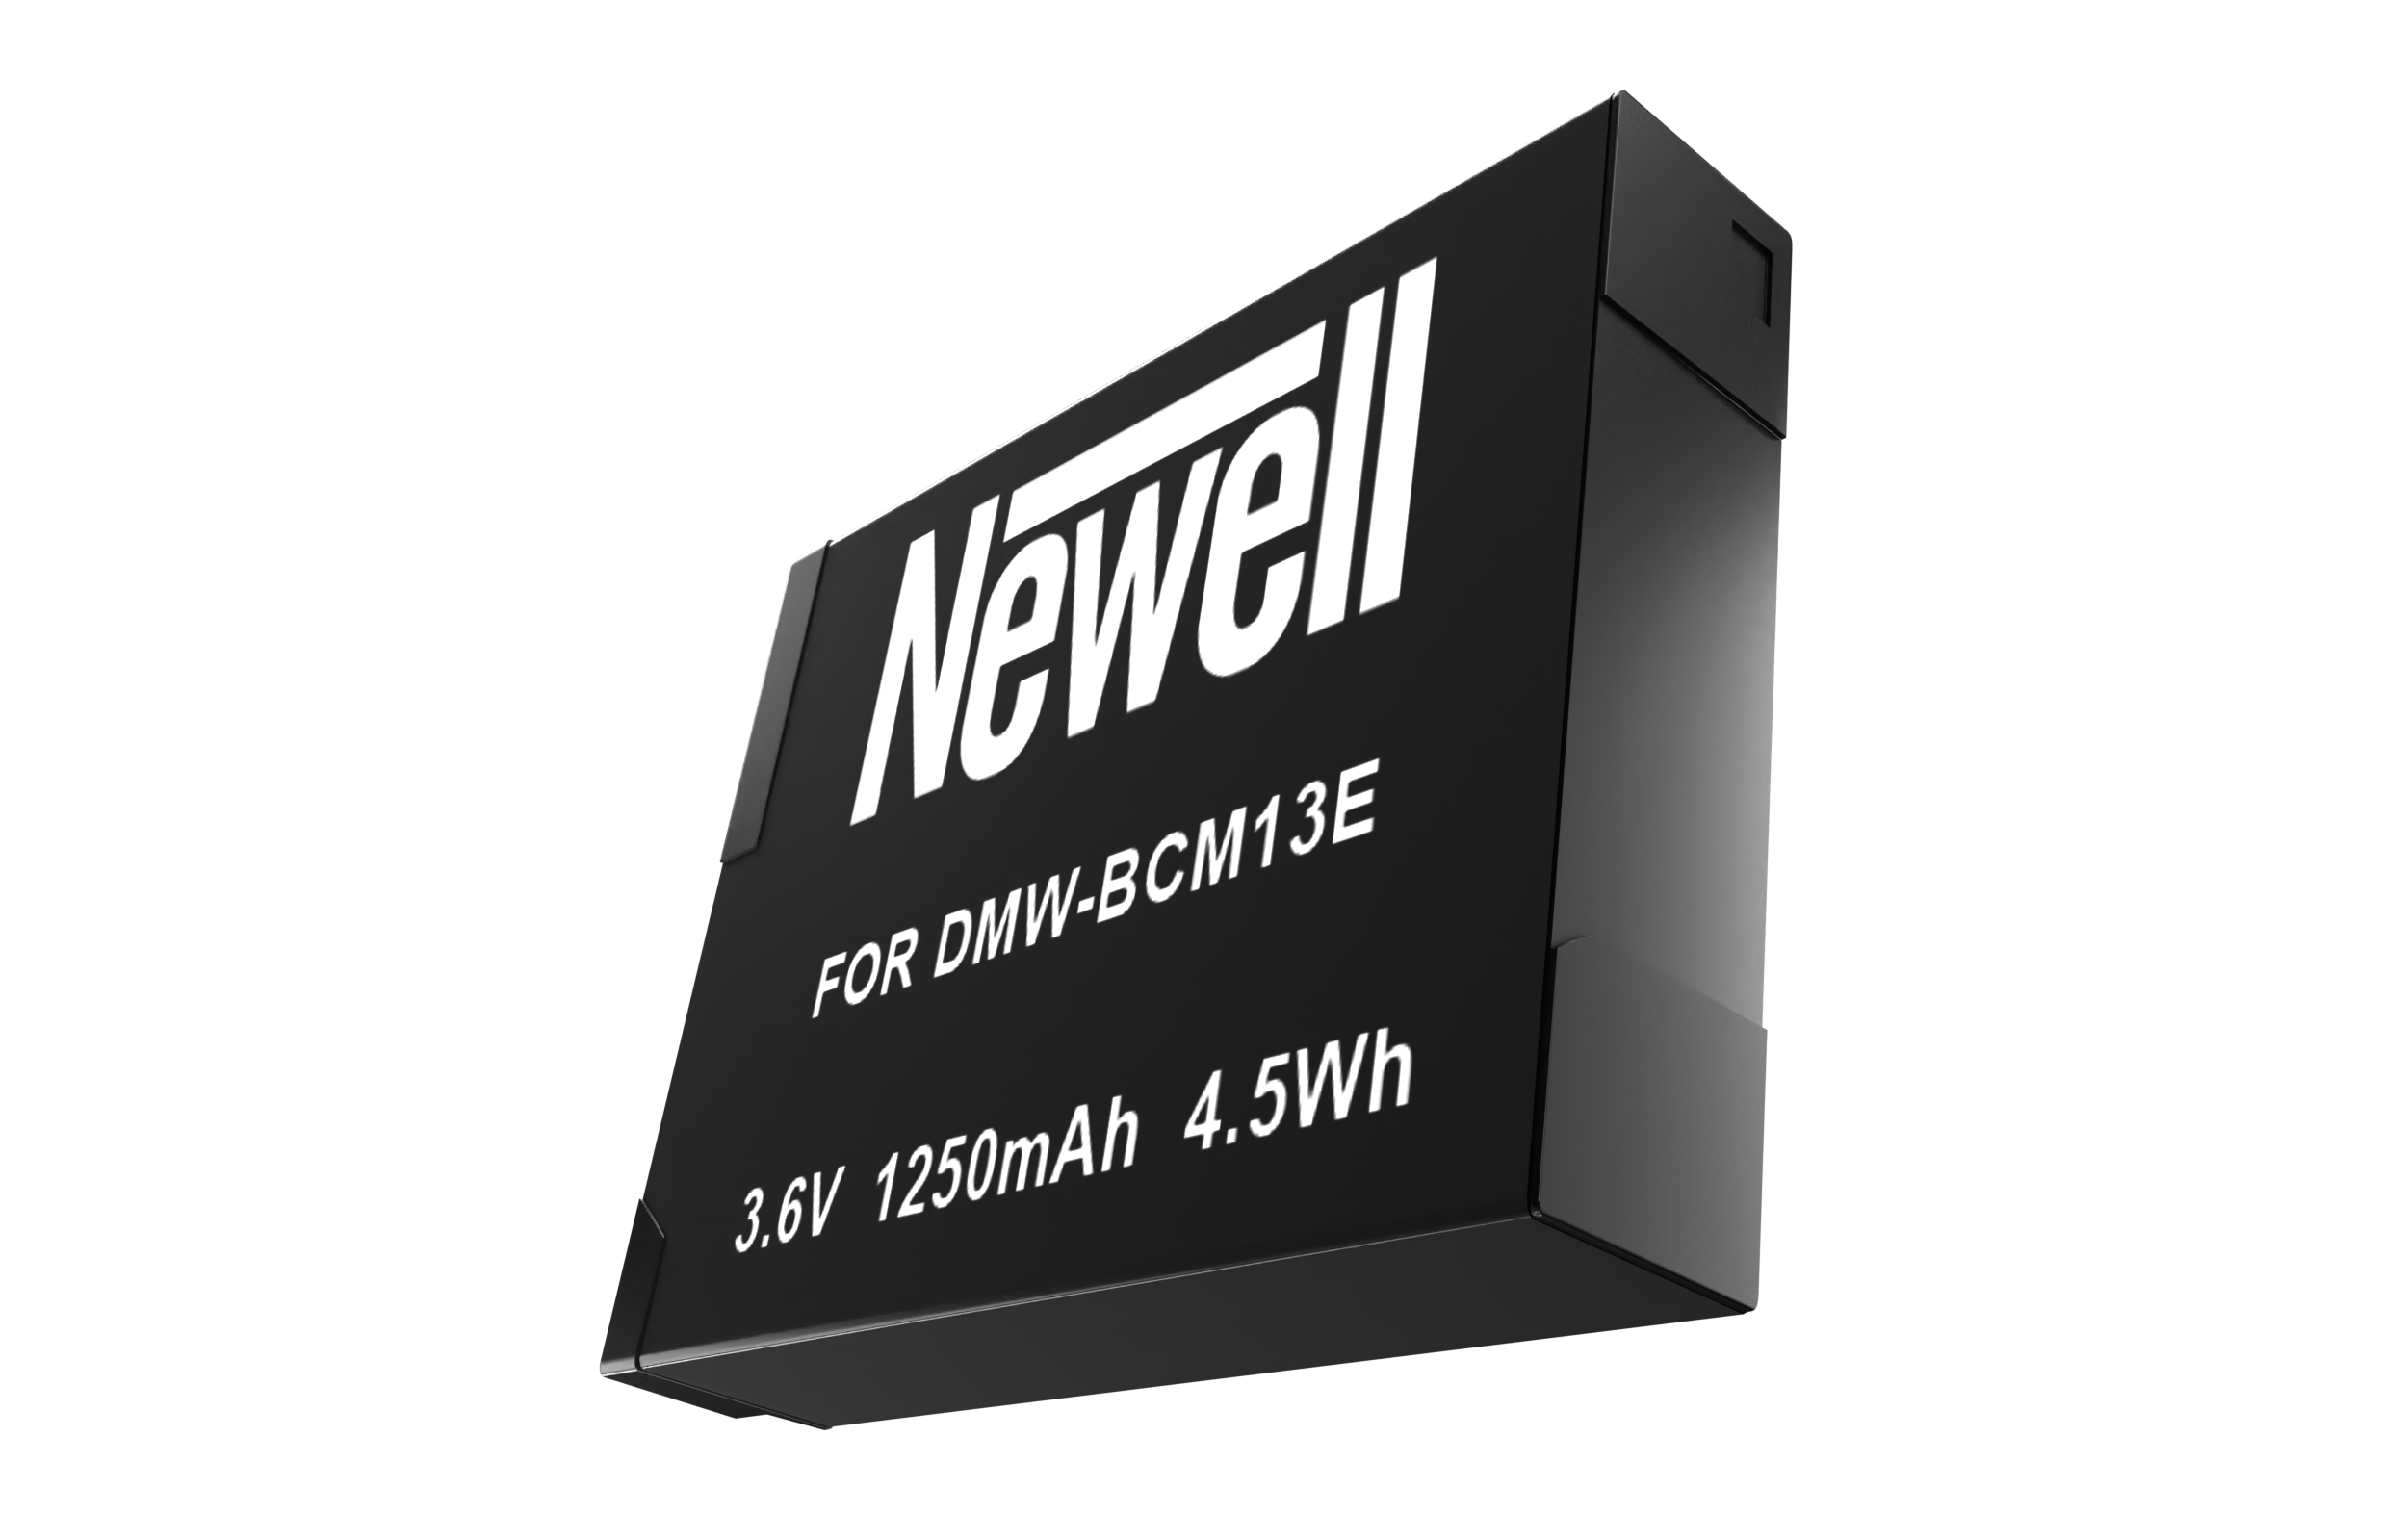 Batterie rechargeable Newell DMW-BCM13E